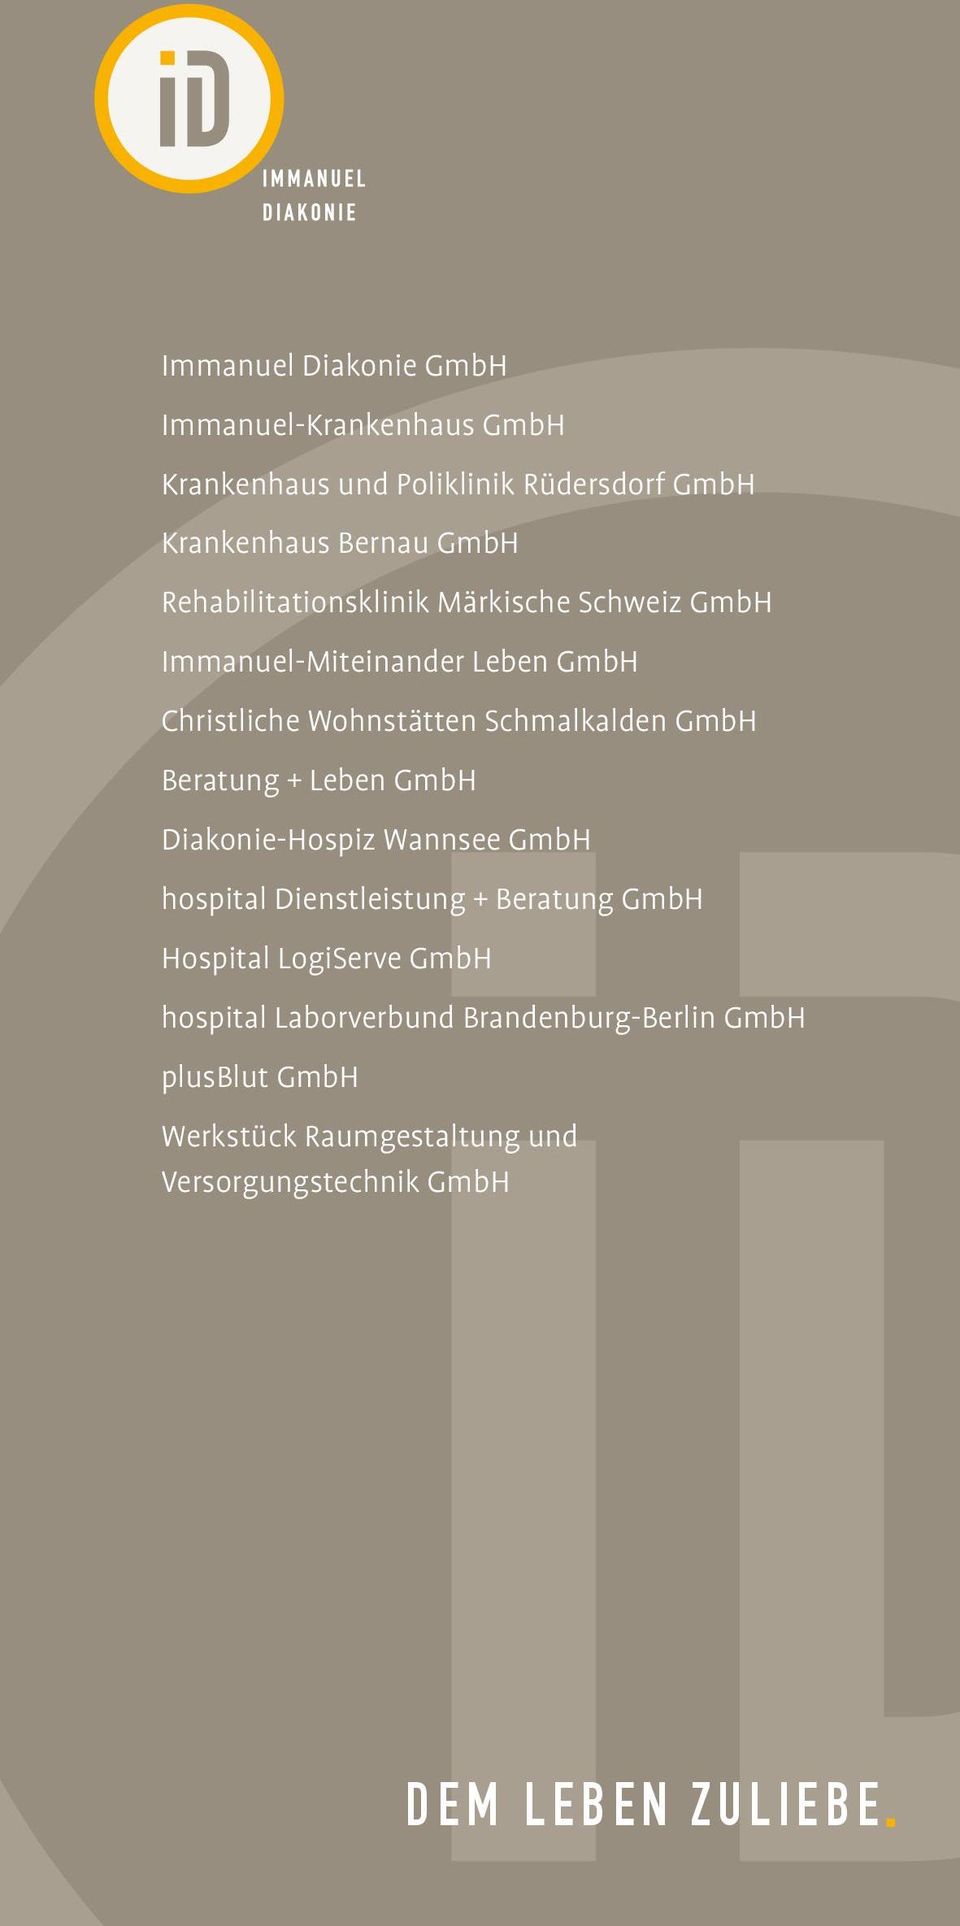 Beratung + Leben GmbH Diakonie-Hospiz Wannsee GmbH hospital Dienstleistung + Beratung GmbH Hospital LogiServe GmbH